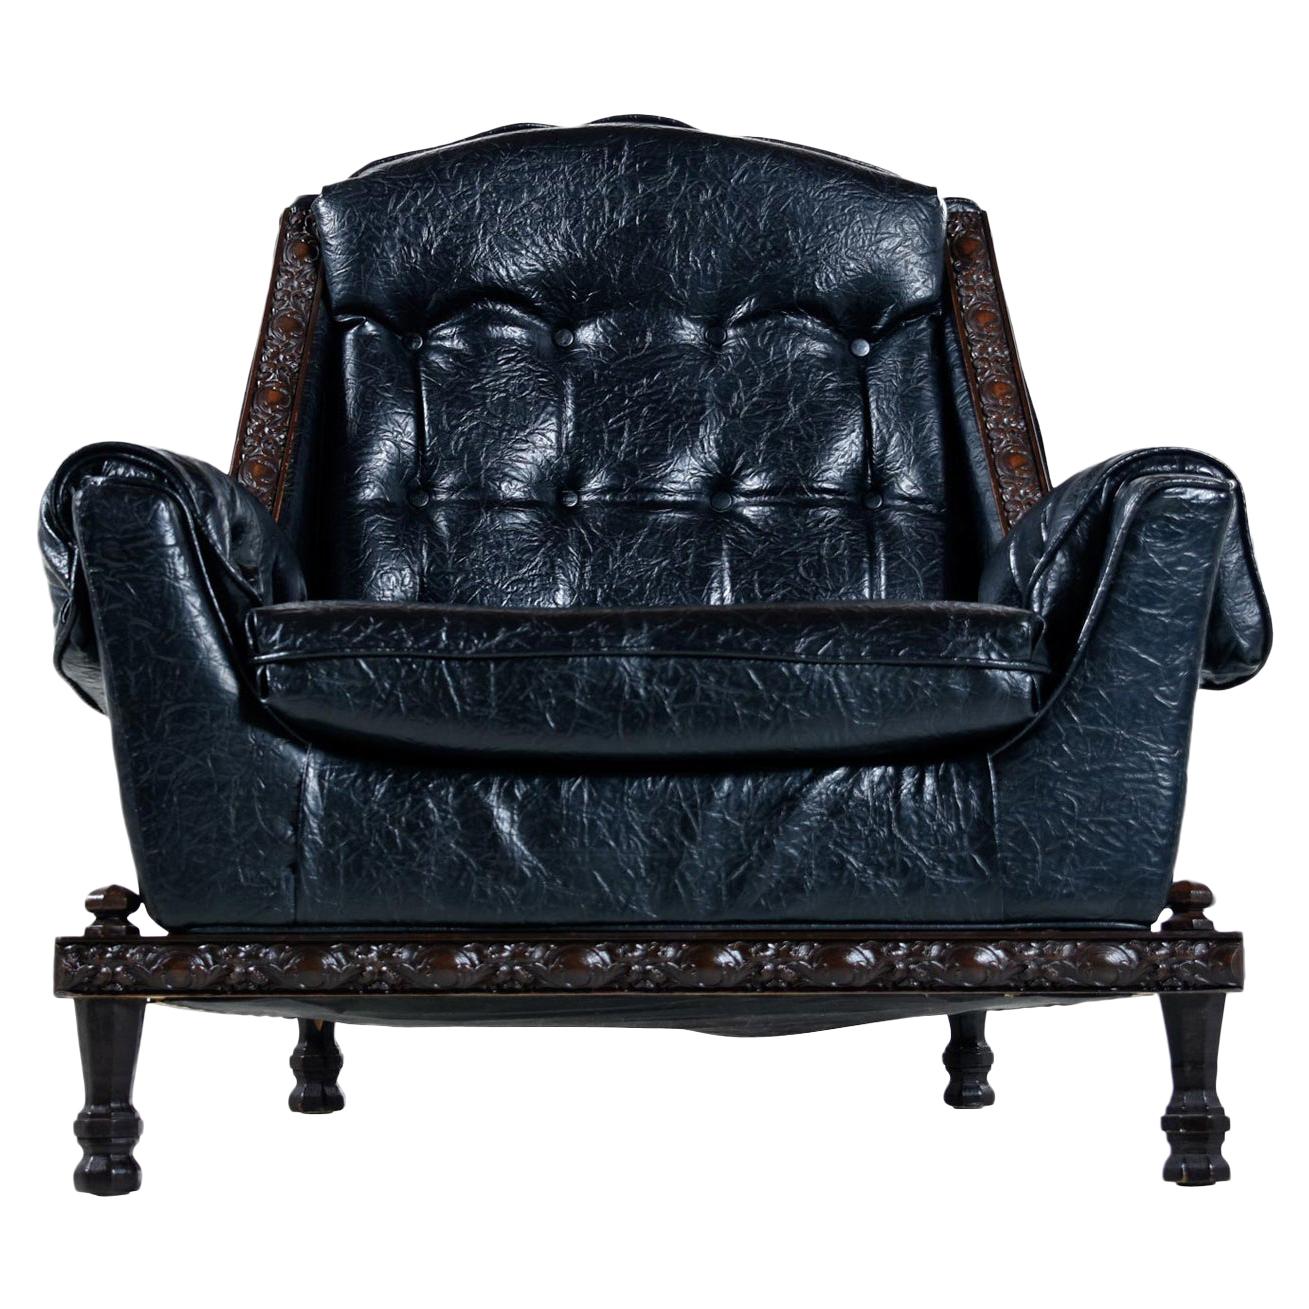 Spanish Mediterranean Style Black Tufted Vinyl Recliner Lounge Chair